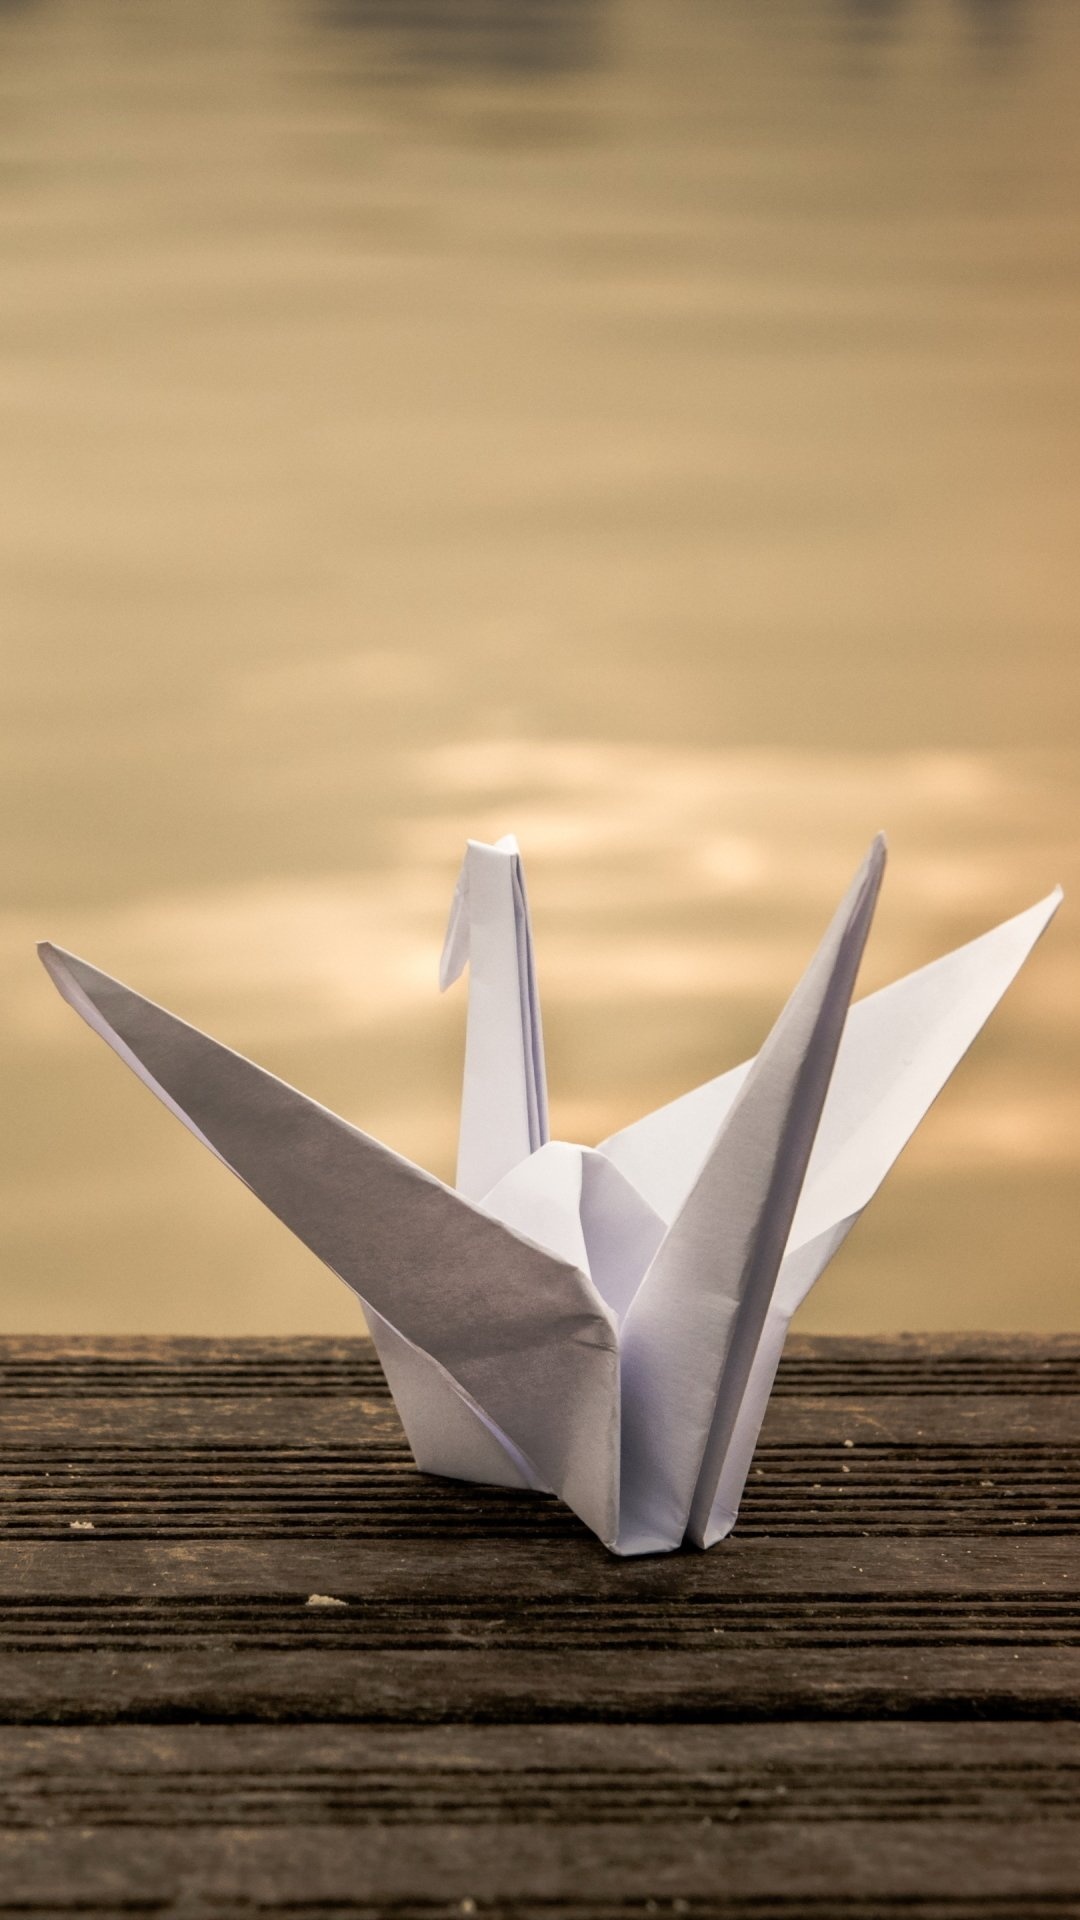 Paper Crane, Man-made art, Masterpiece of origami, Crafty creation, 1080x1920 Full HD Handy